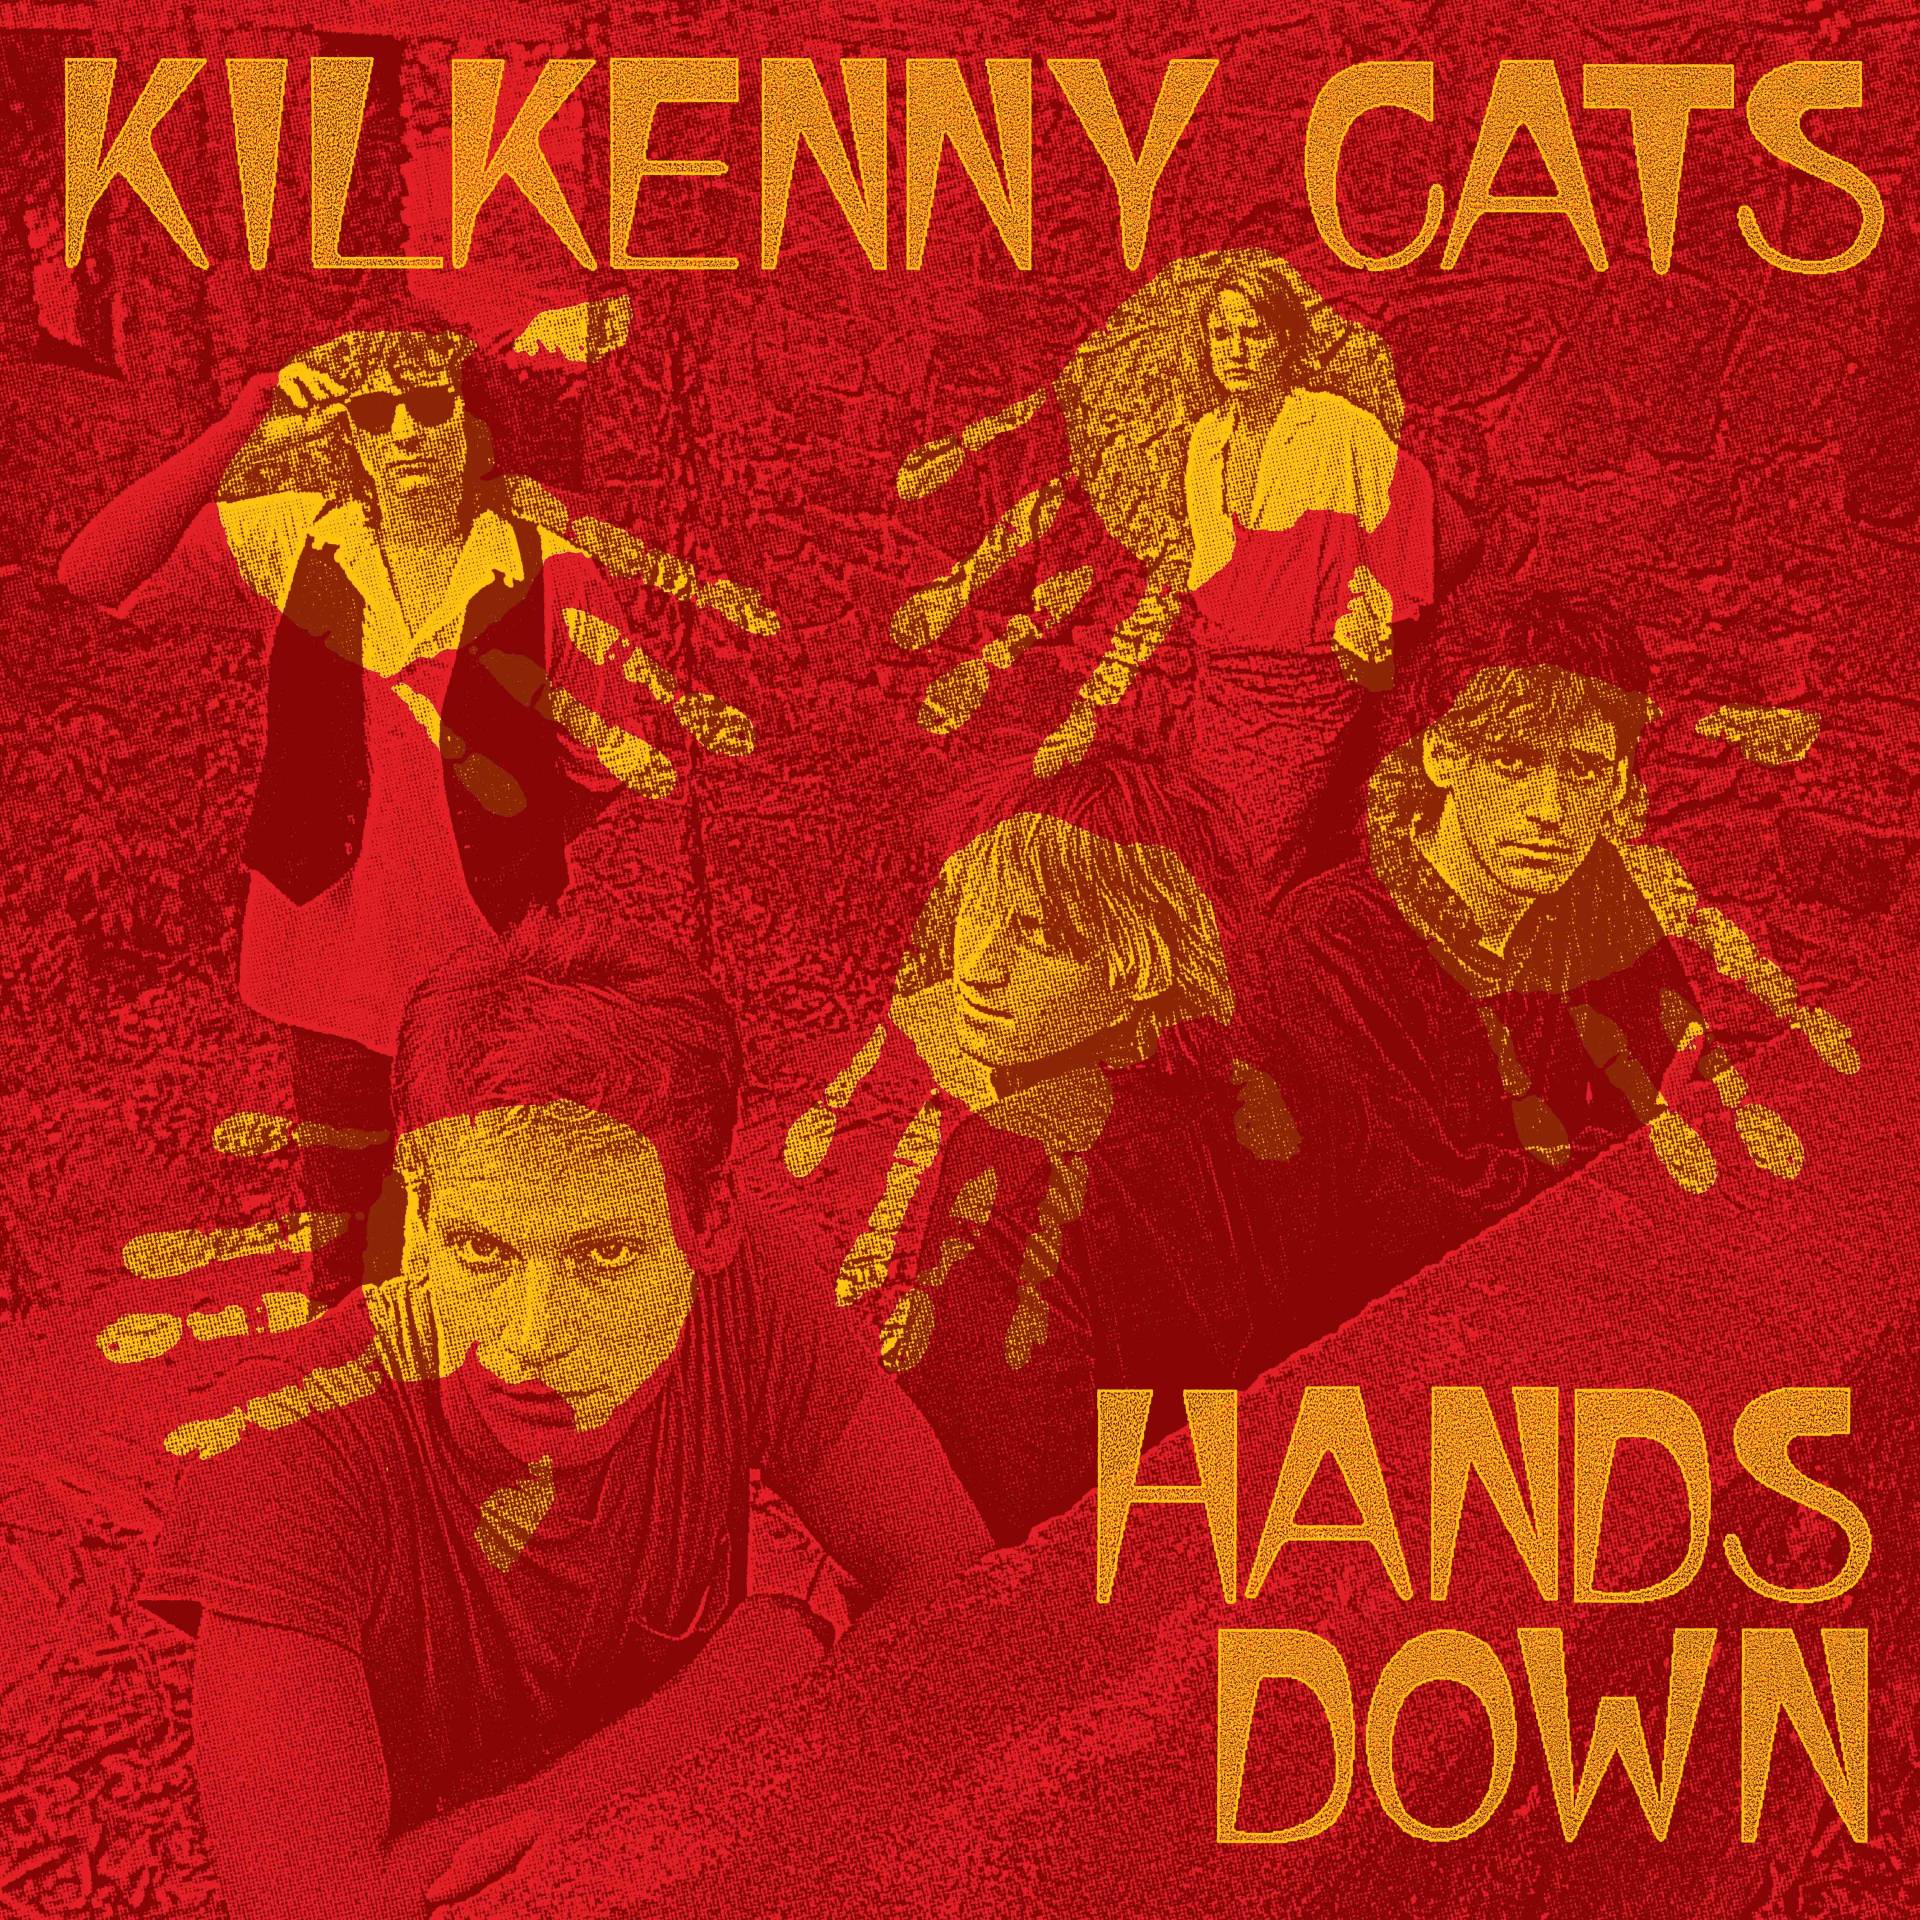 Kilkenny Cats ‘Hands Down’ album artwork